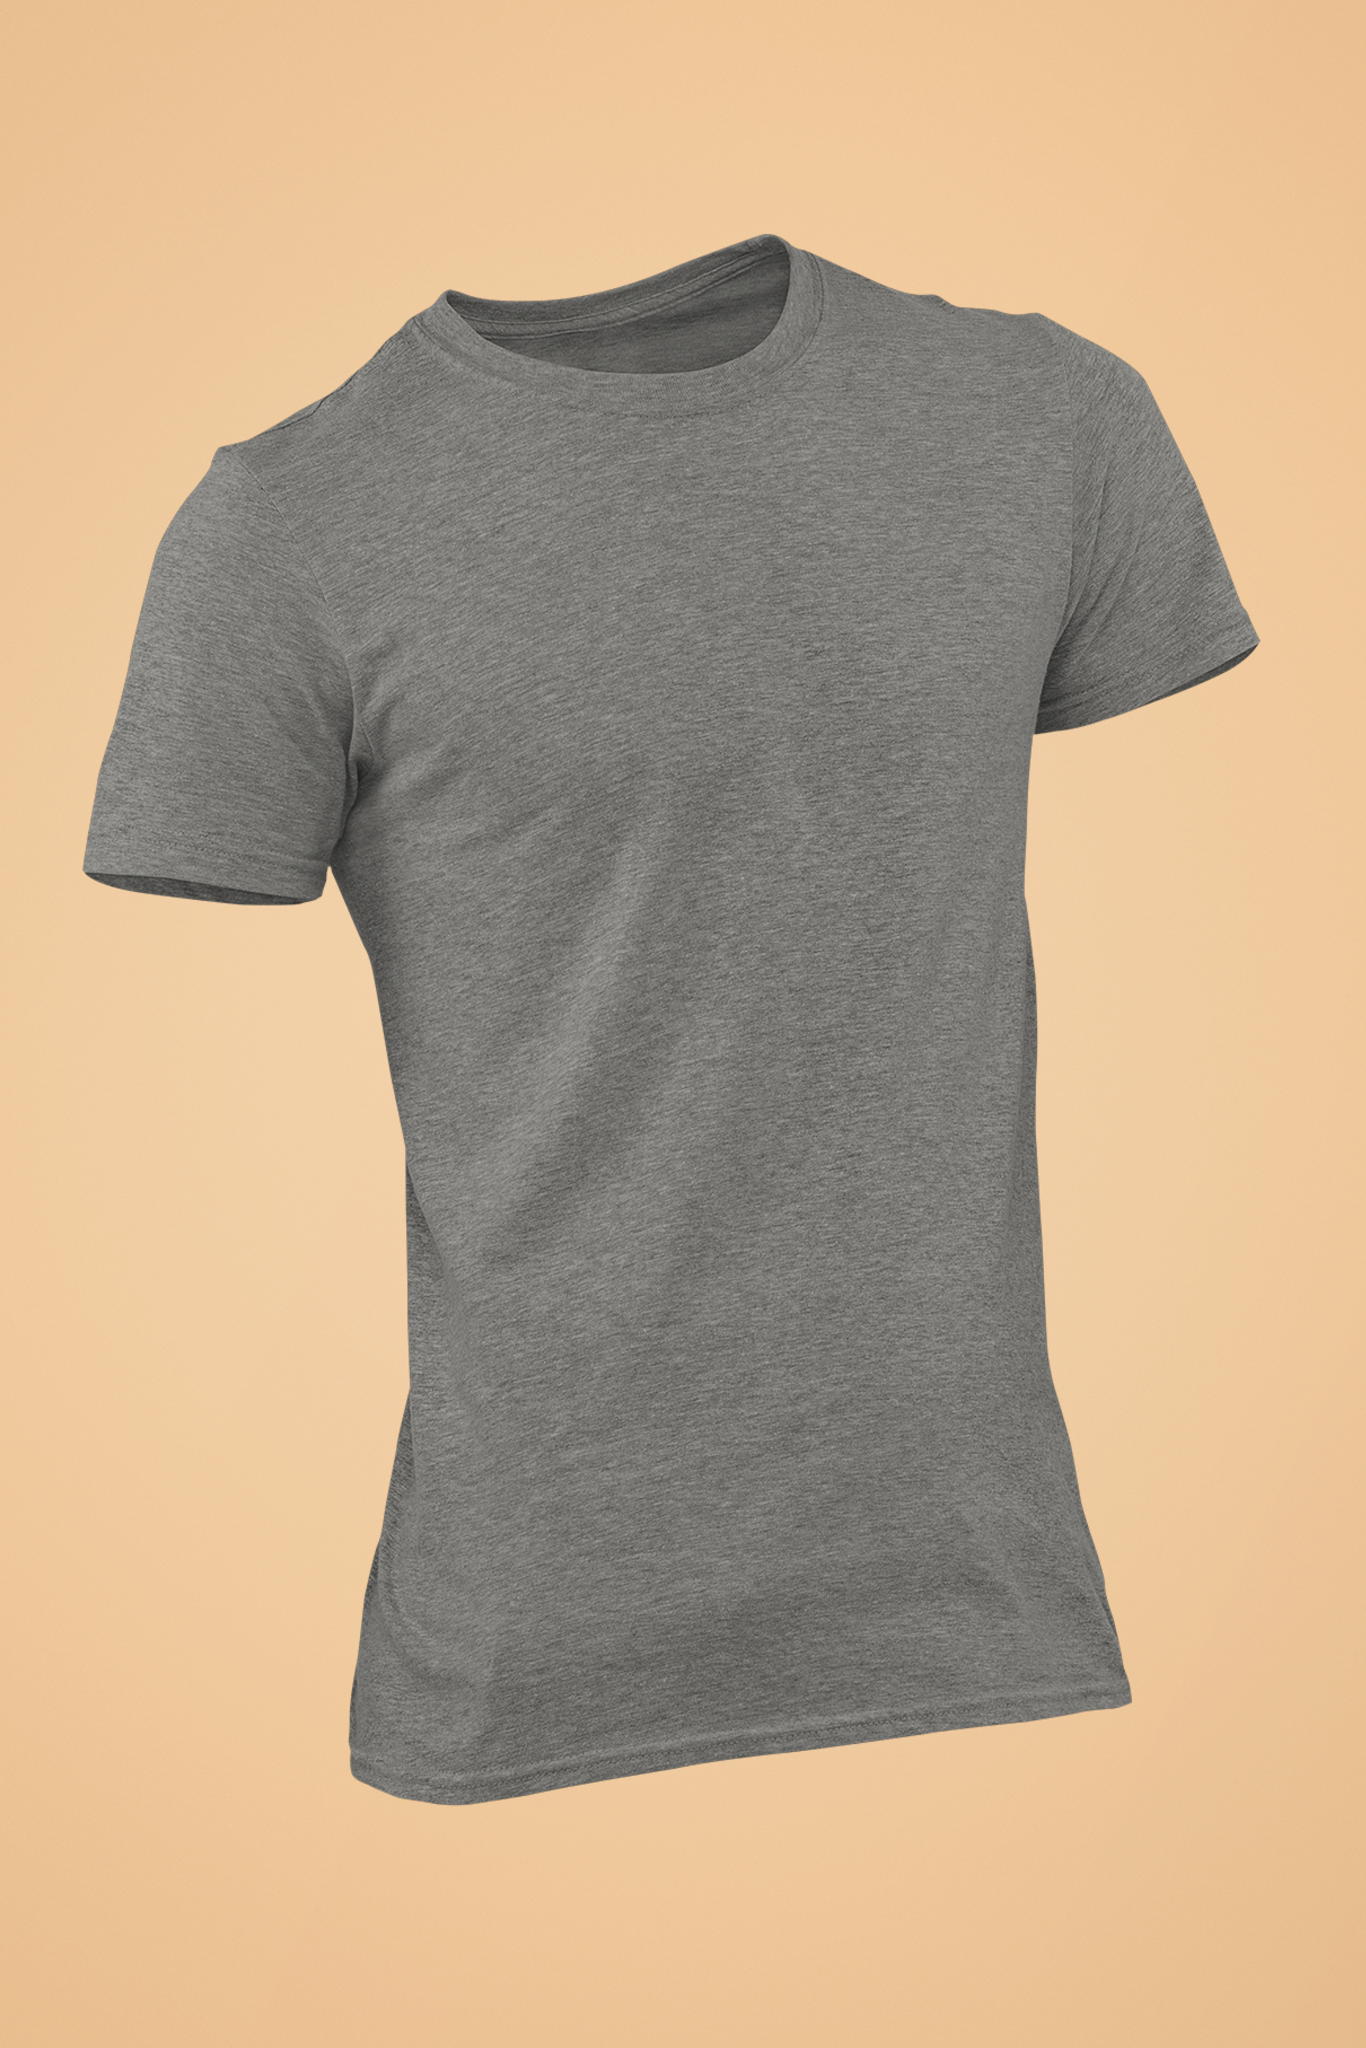 Unisex Round Neck: Charcoal T-Shirt